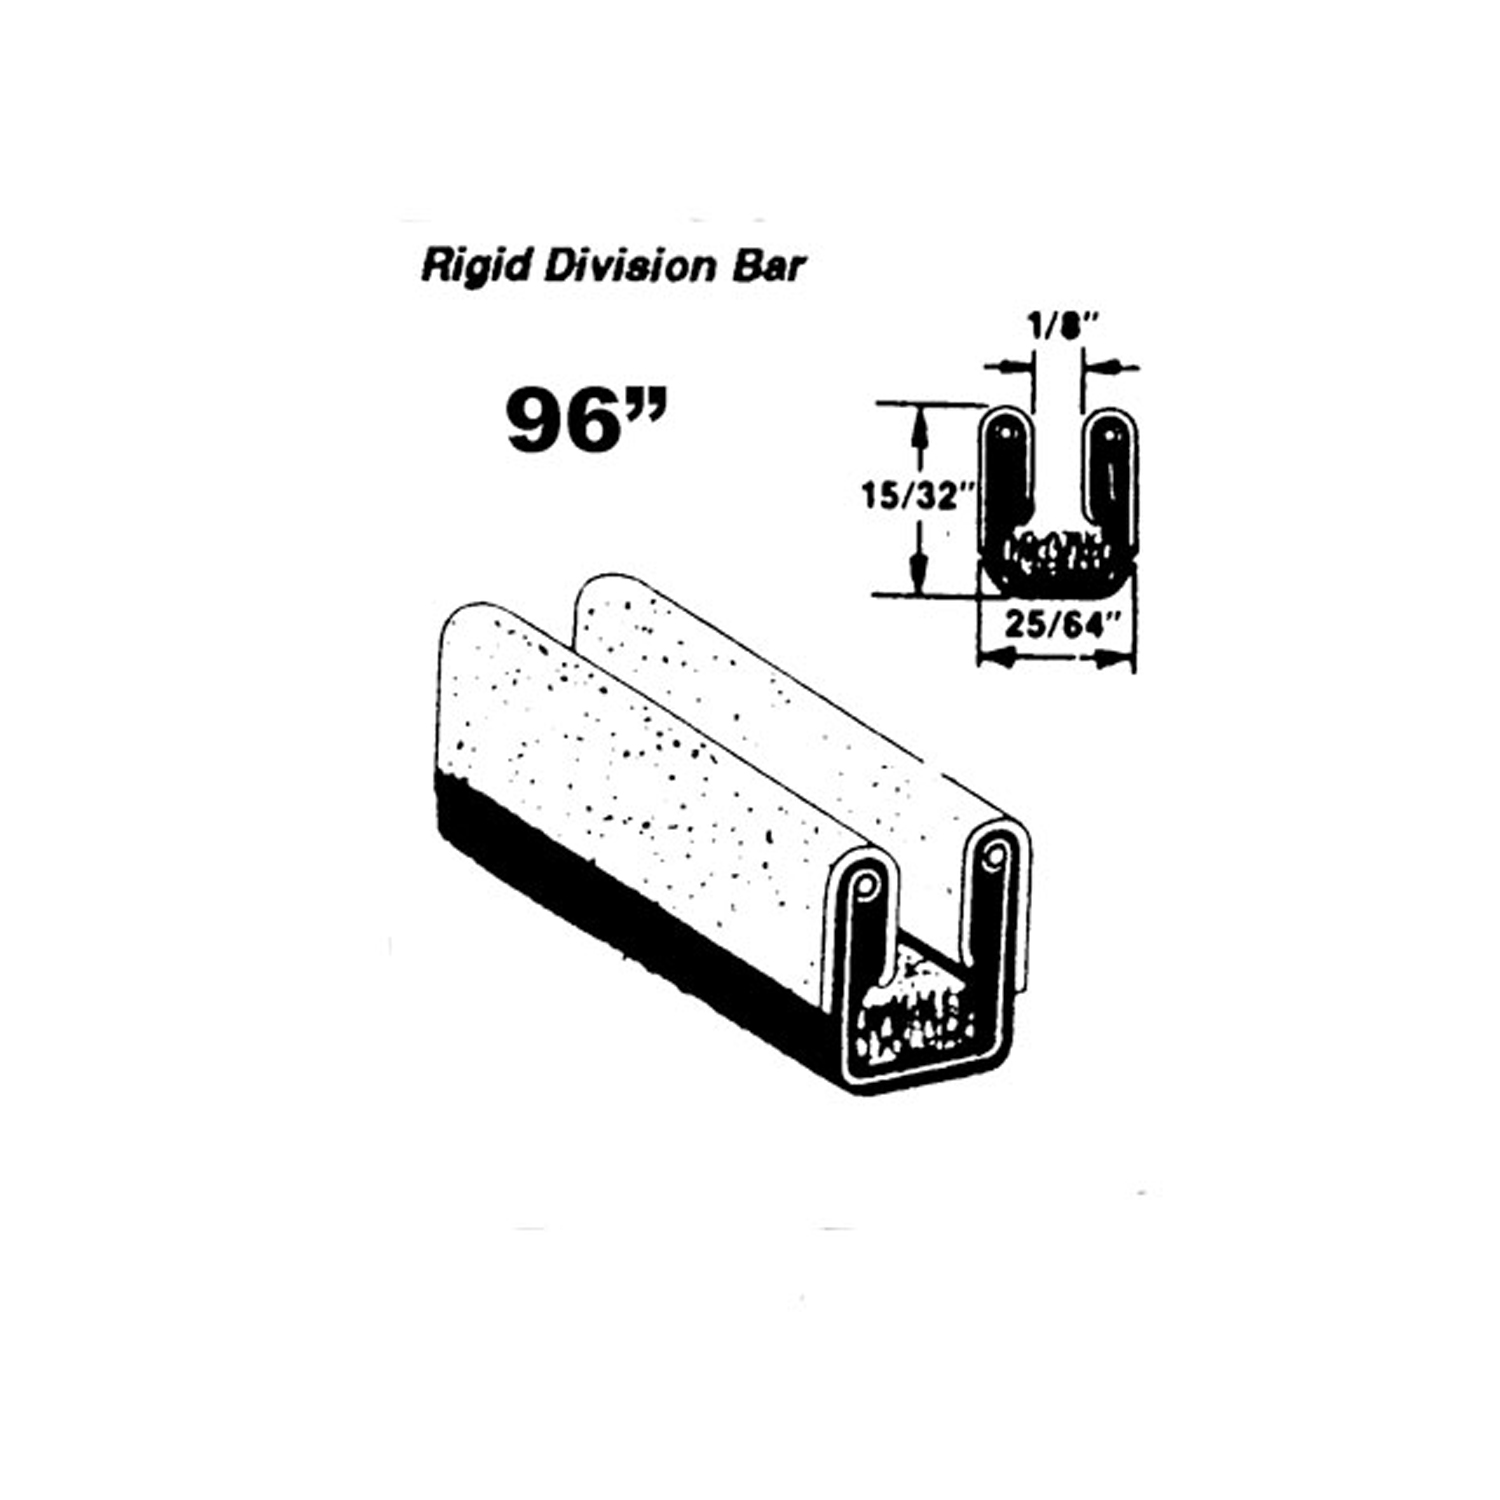 1951 Dodge Coronet Rigid division-bar run channel-WC 31-96